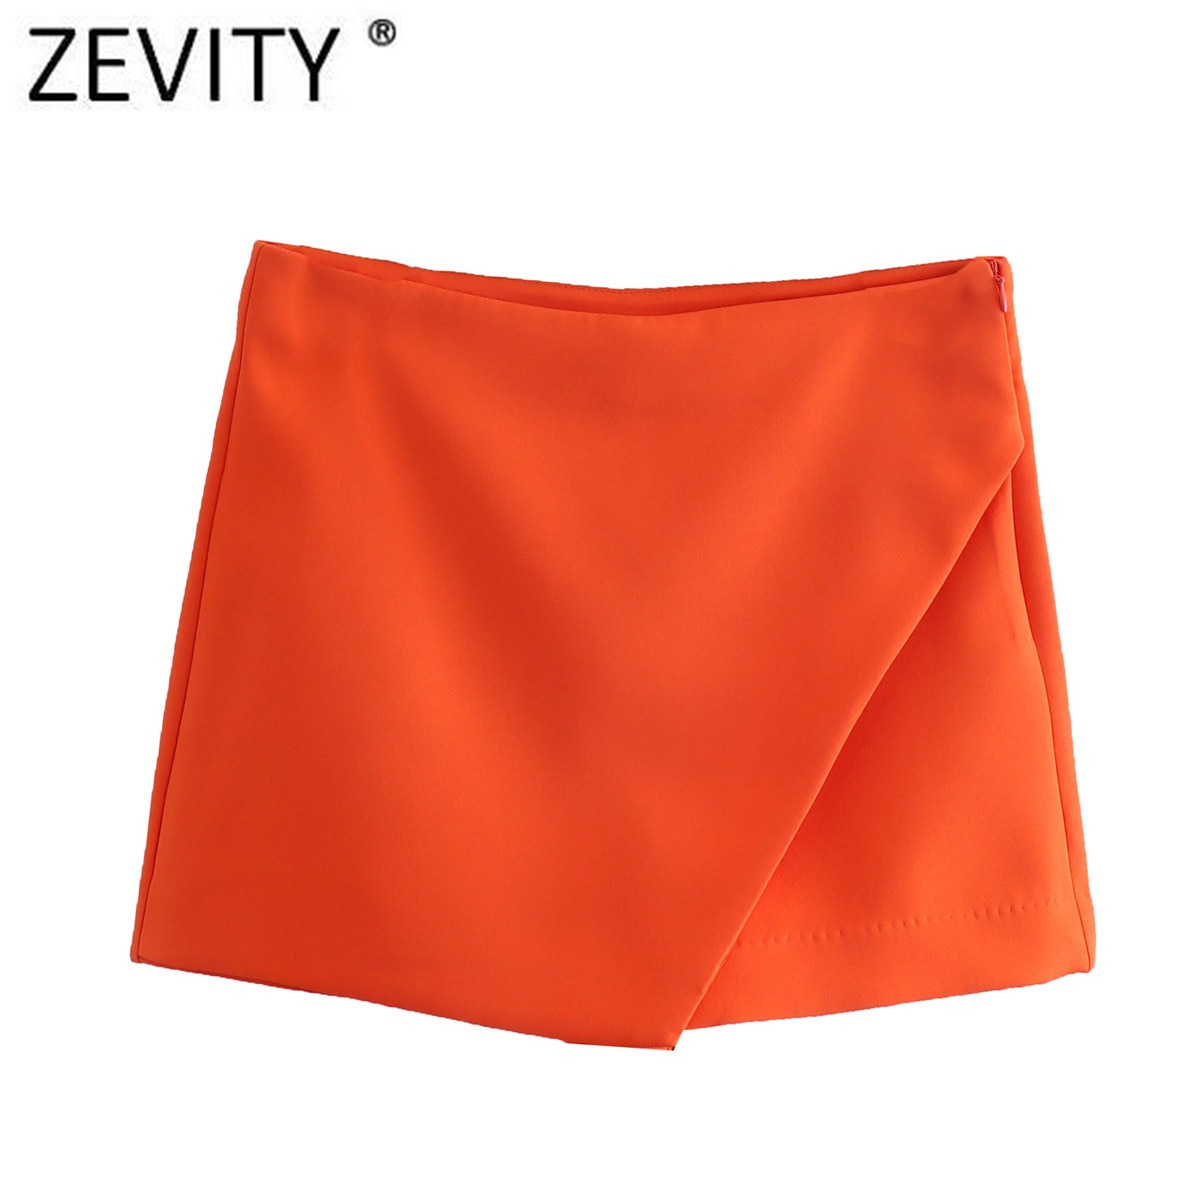 ZEVITY-New-Women-Fashion-Candy-Color-Asymmetrical-Shorts-Skirts-Lady-Zipper-Fly-Pockets-Hot-Shorts-Chic-2